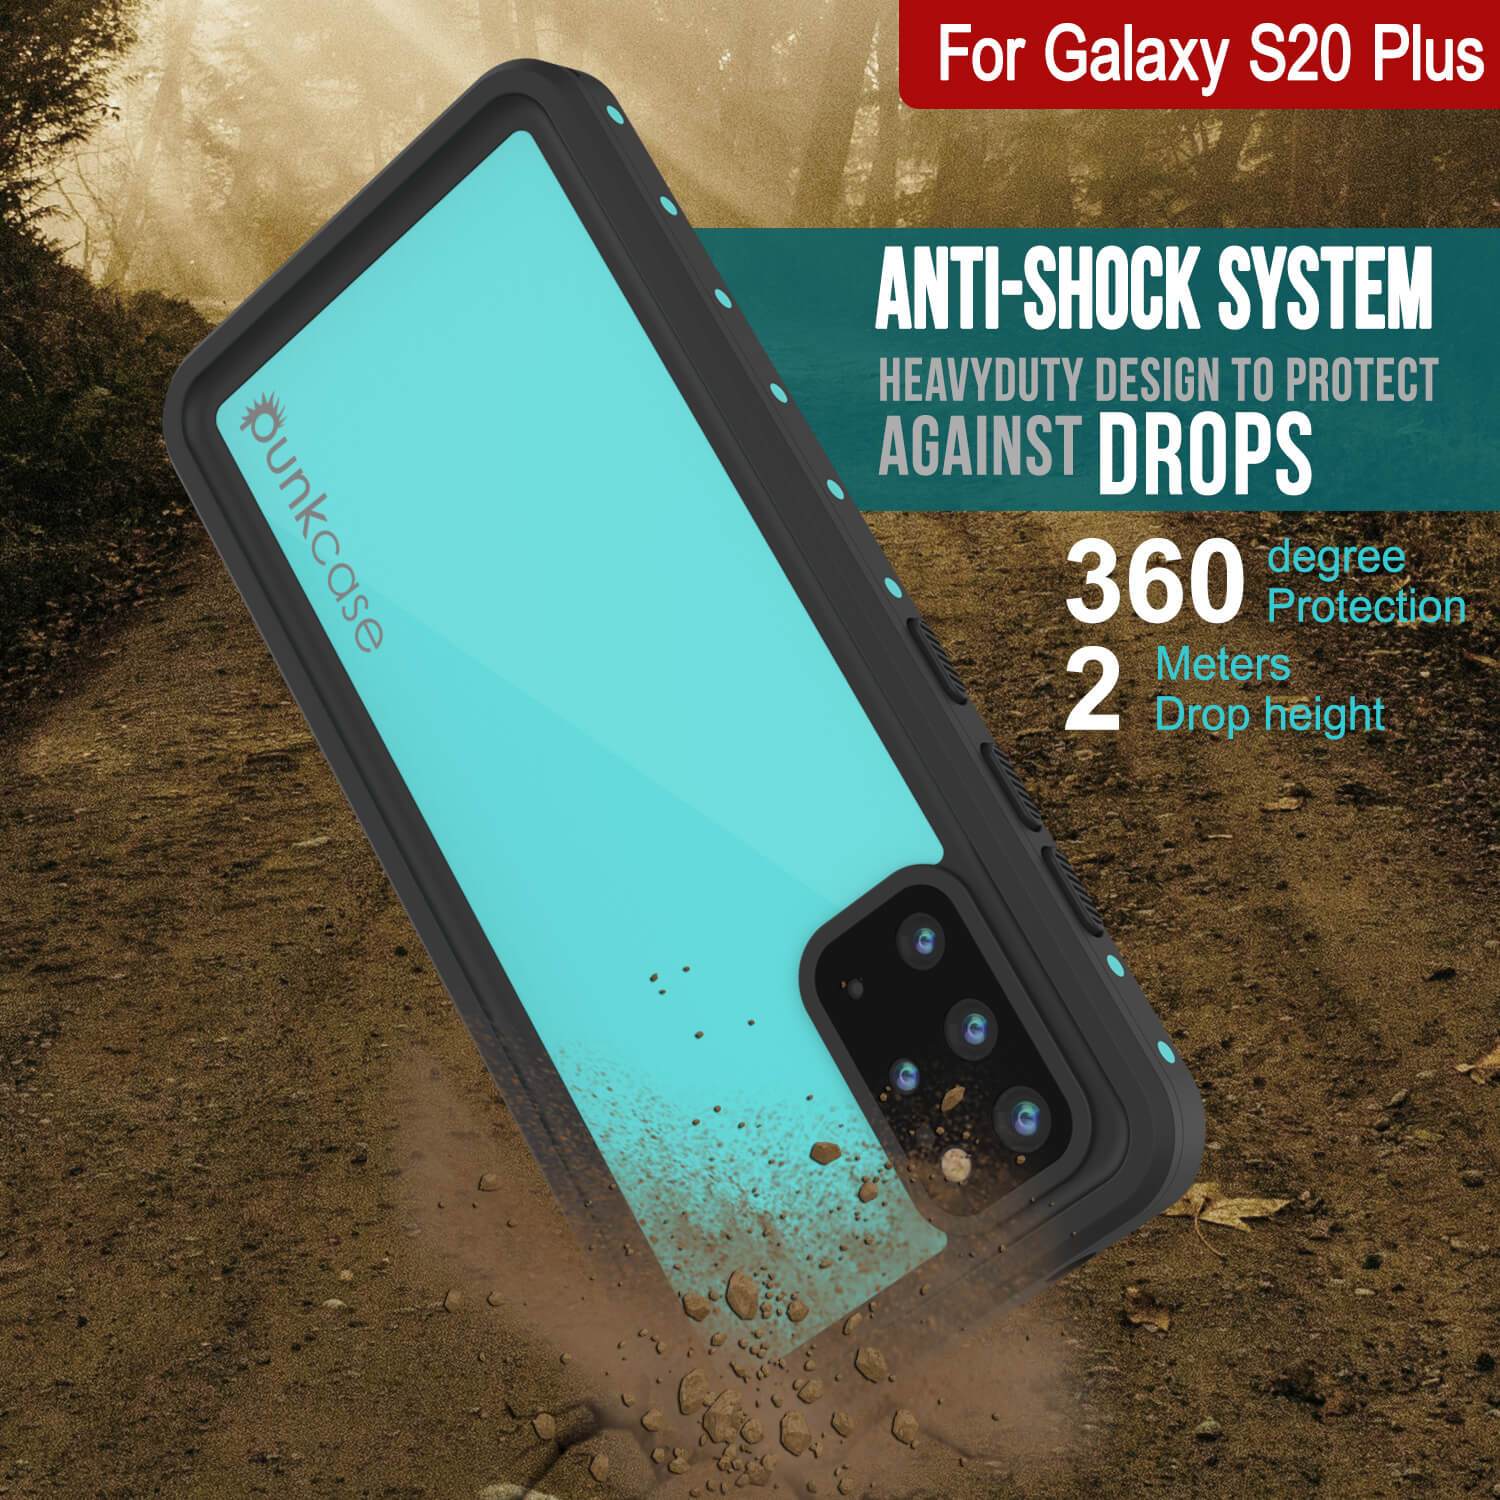 Galaxy S20+ Plus Waterproof Case PunkCase StudStar Teal Thin 6.6ft Underwater IP68 Shock/Snow Proof